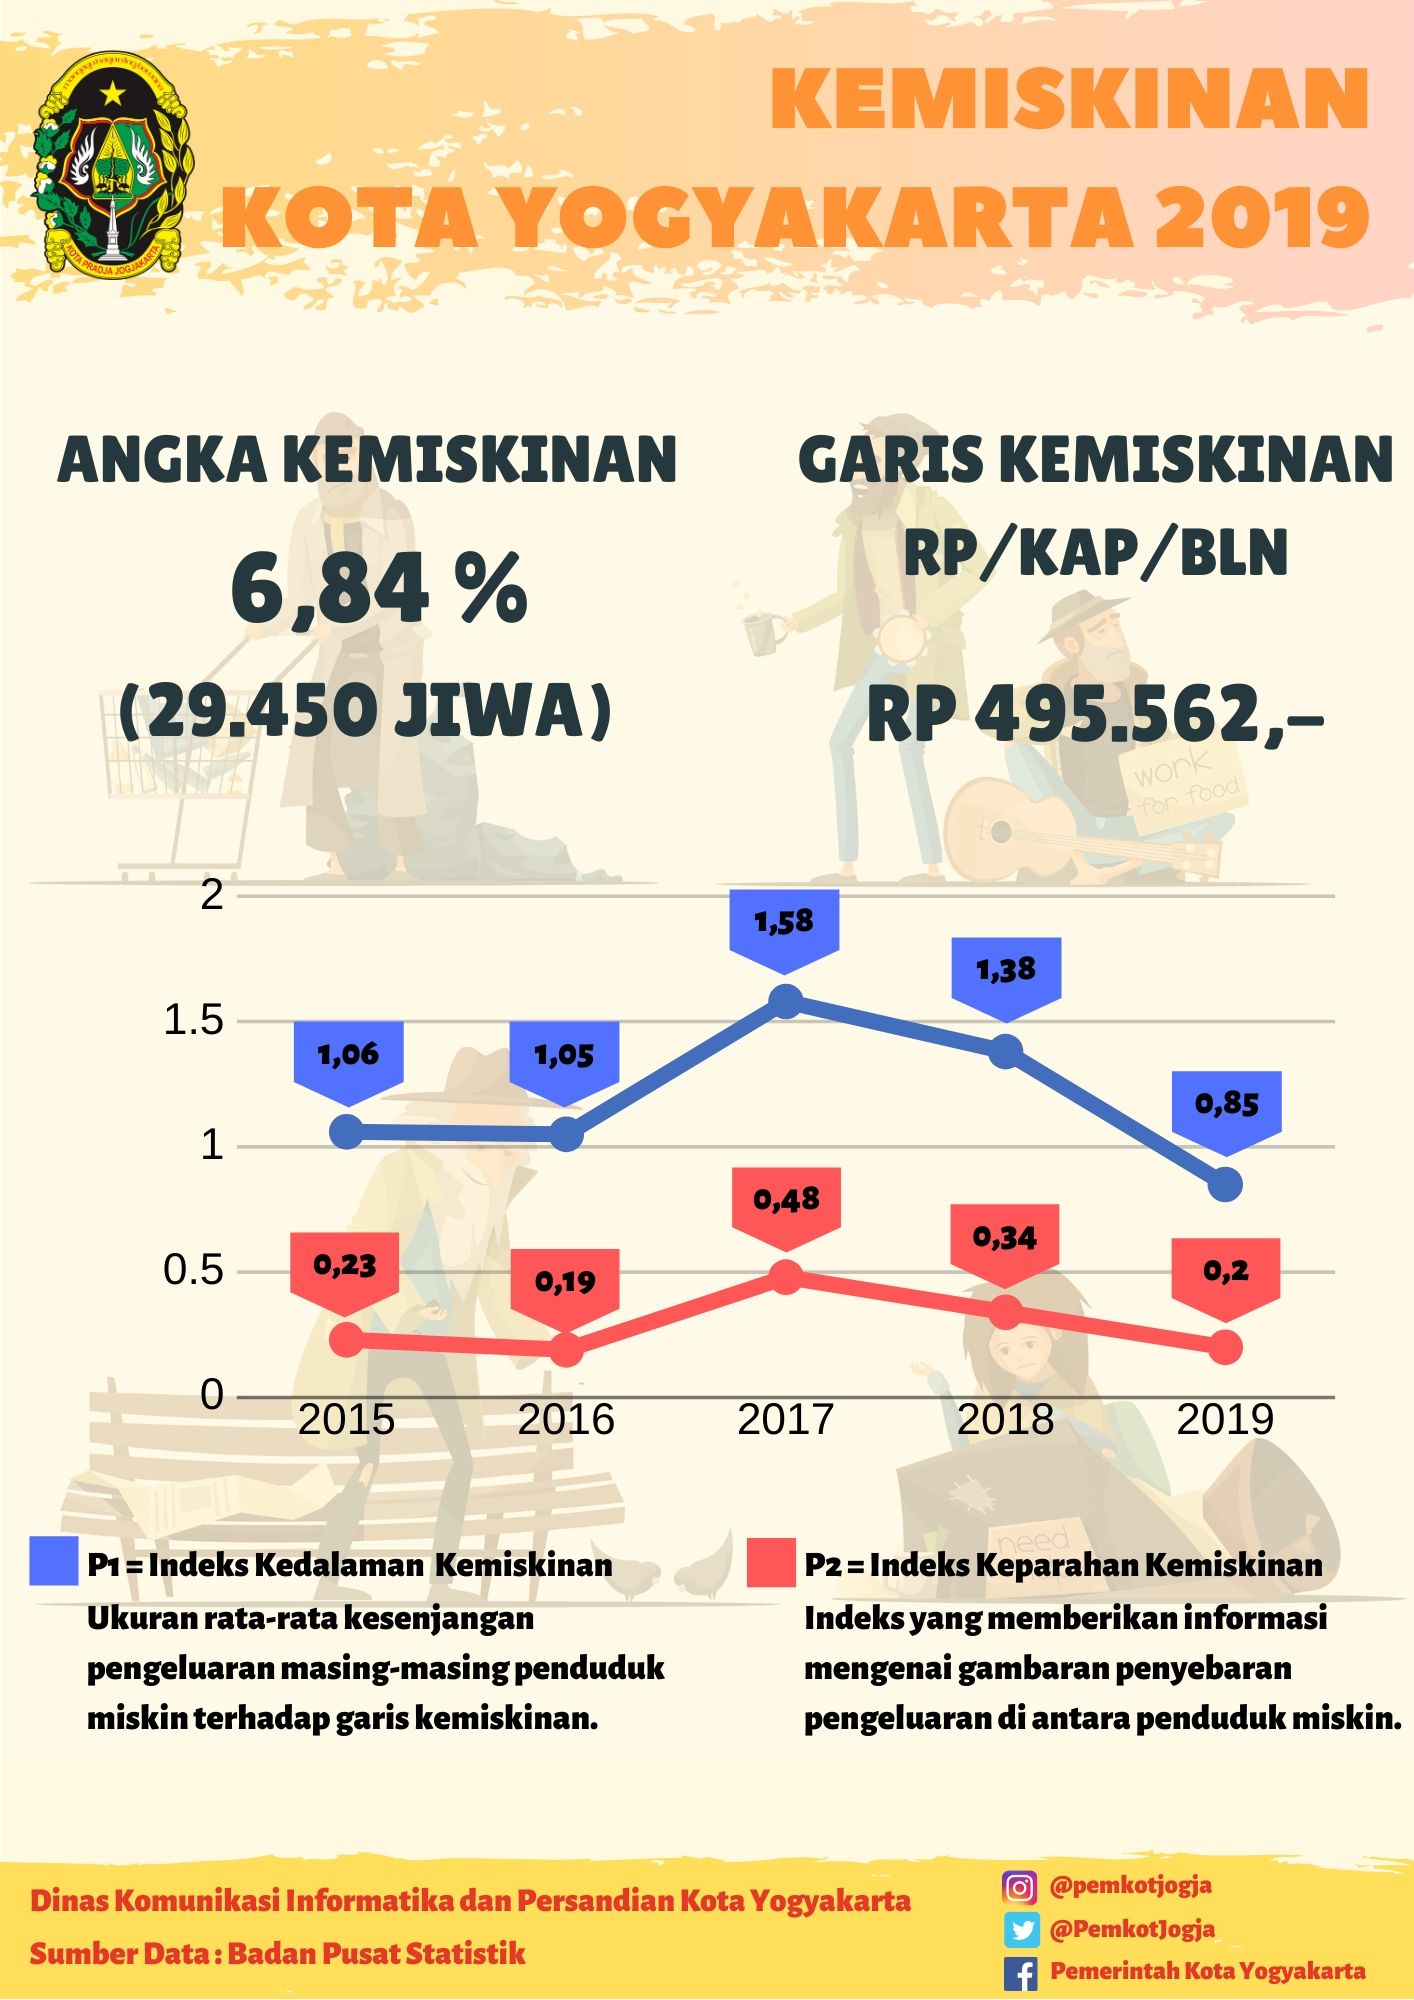 Kemiskinan Kota Yogyakarta Tahun 2019